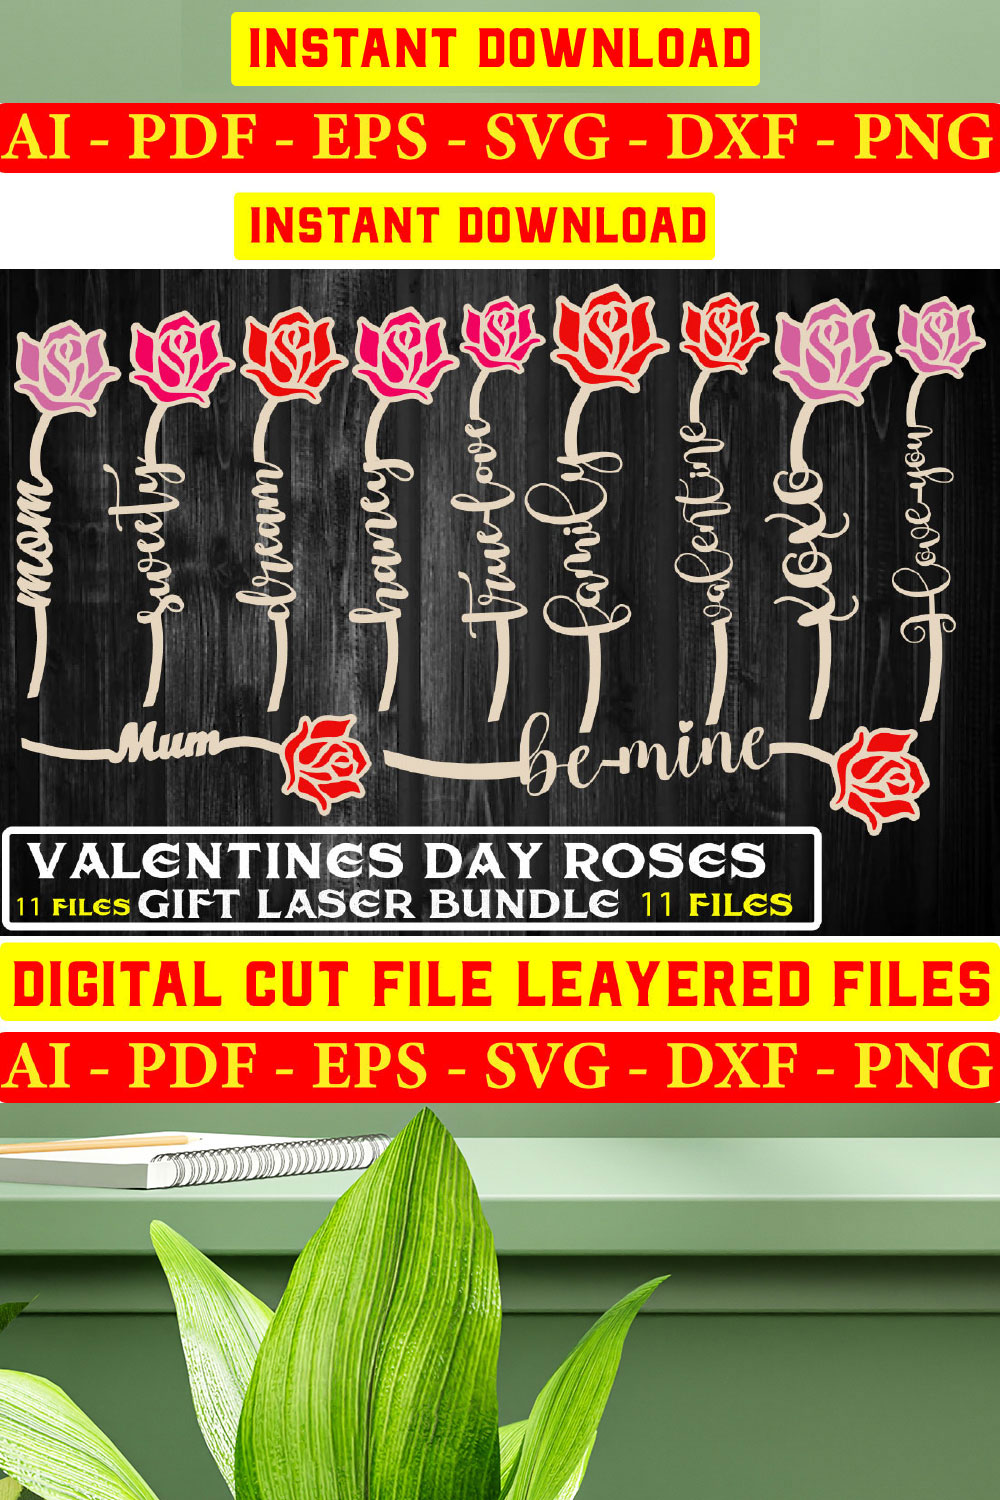 Rose, Layers Laser cut svg, Rose svg, Valentine Day, Flower Laser cut files, Love, XOXO, Sweetie, Honey, CNC Laset cut pinterest preview image.